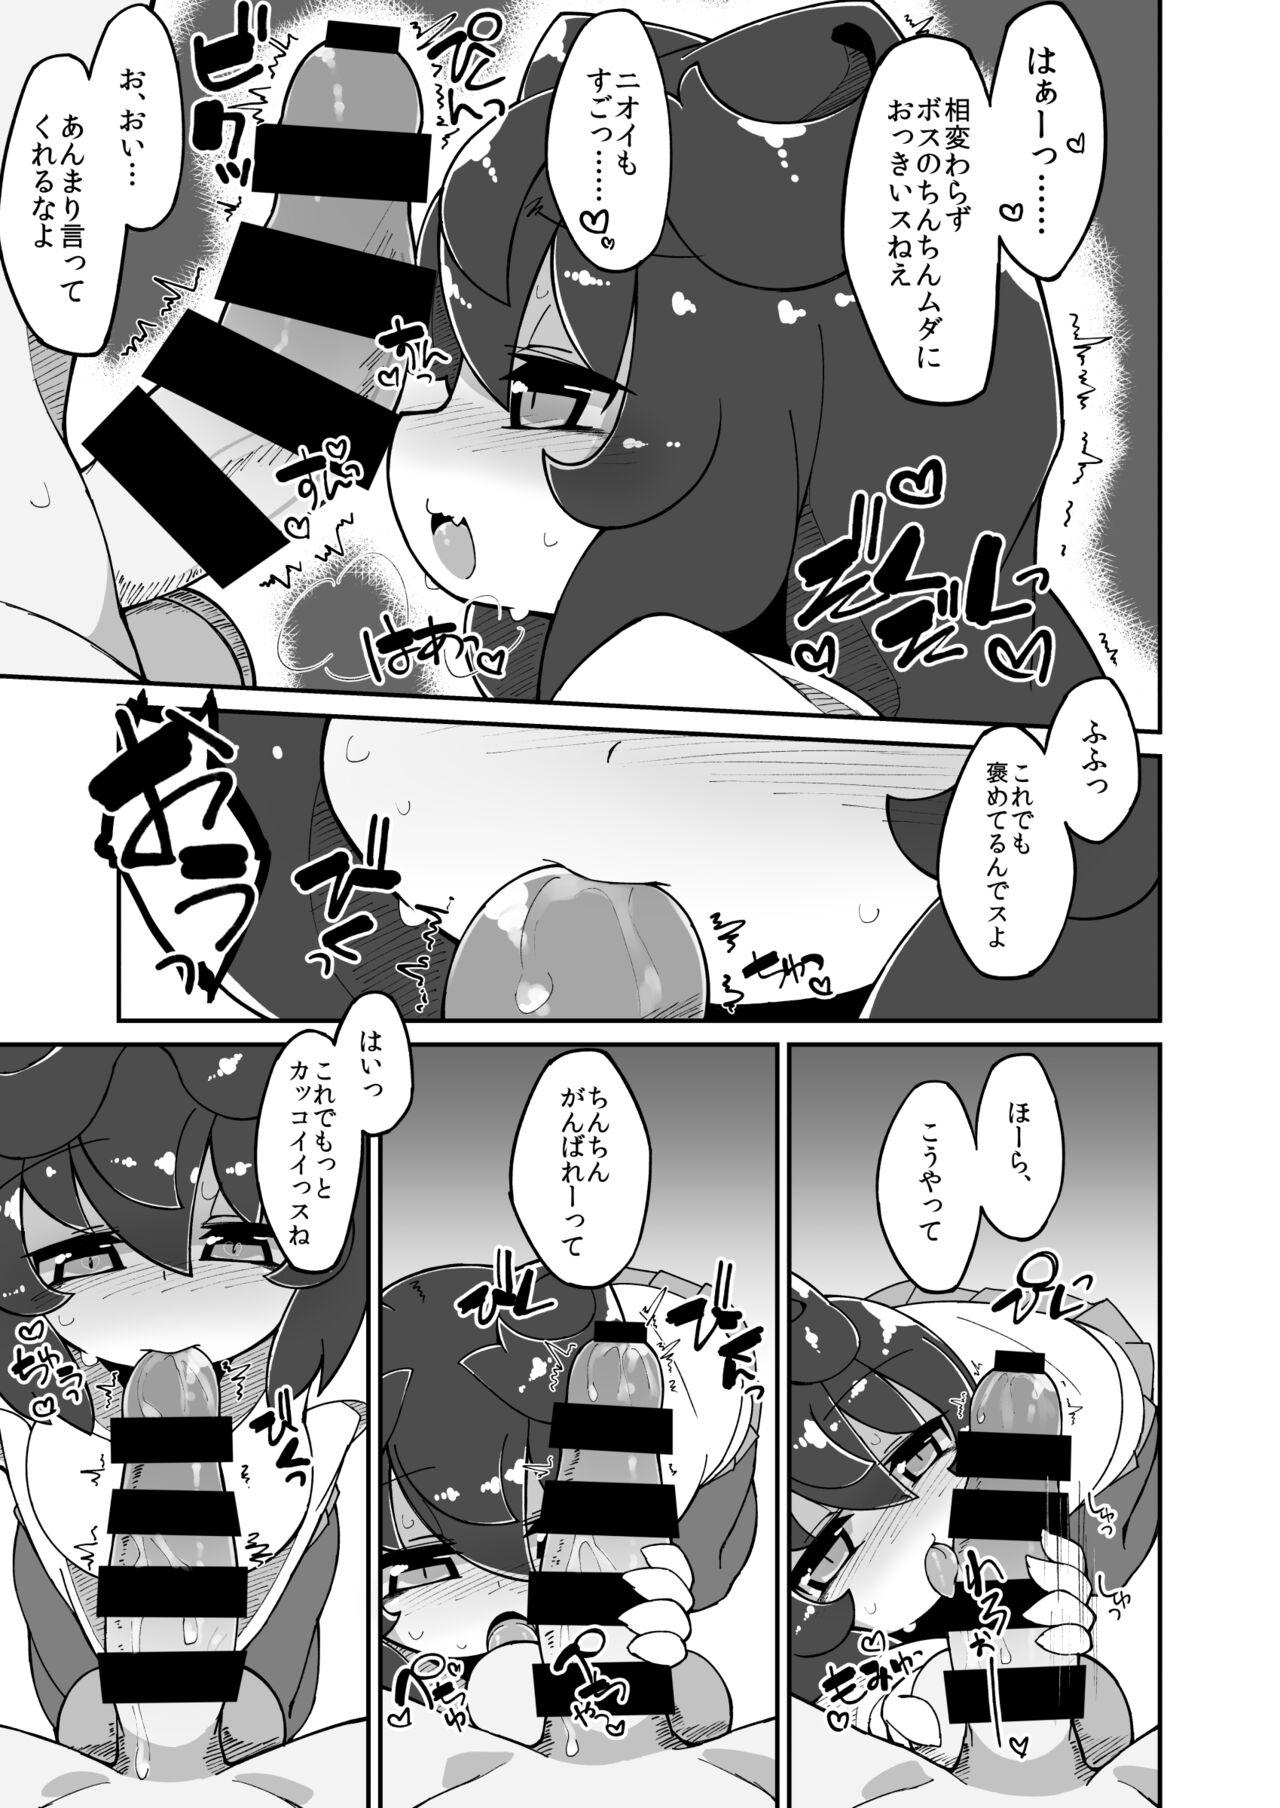 Prune to Ouchi Ecchi Manga 1